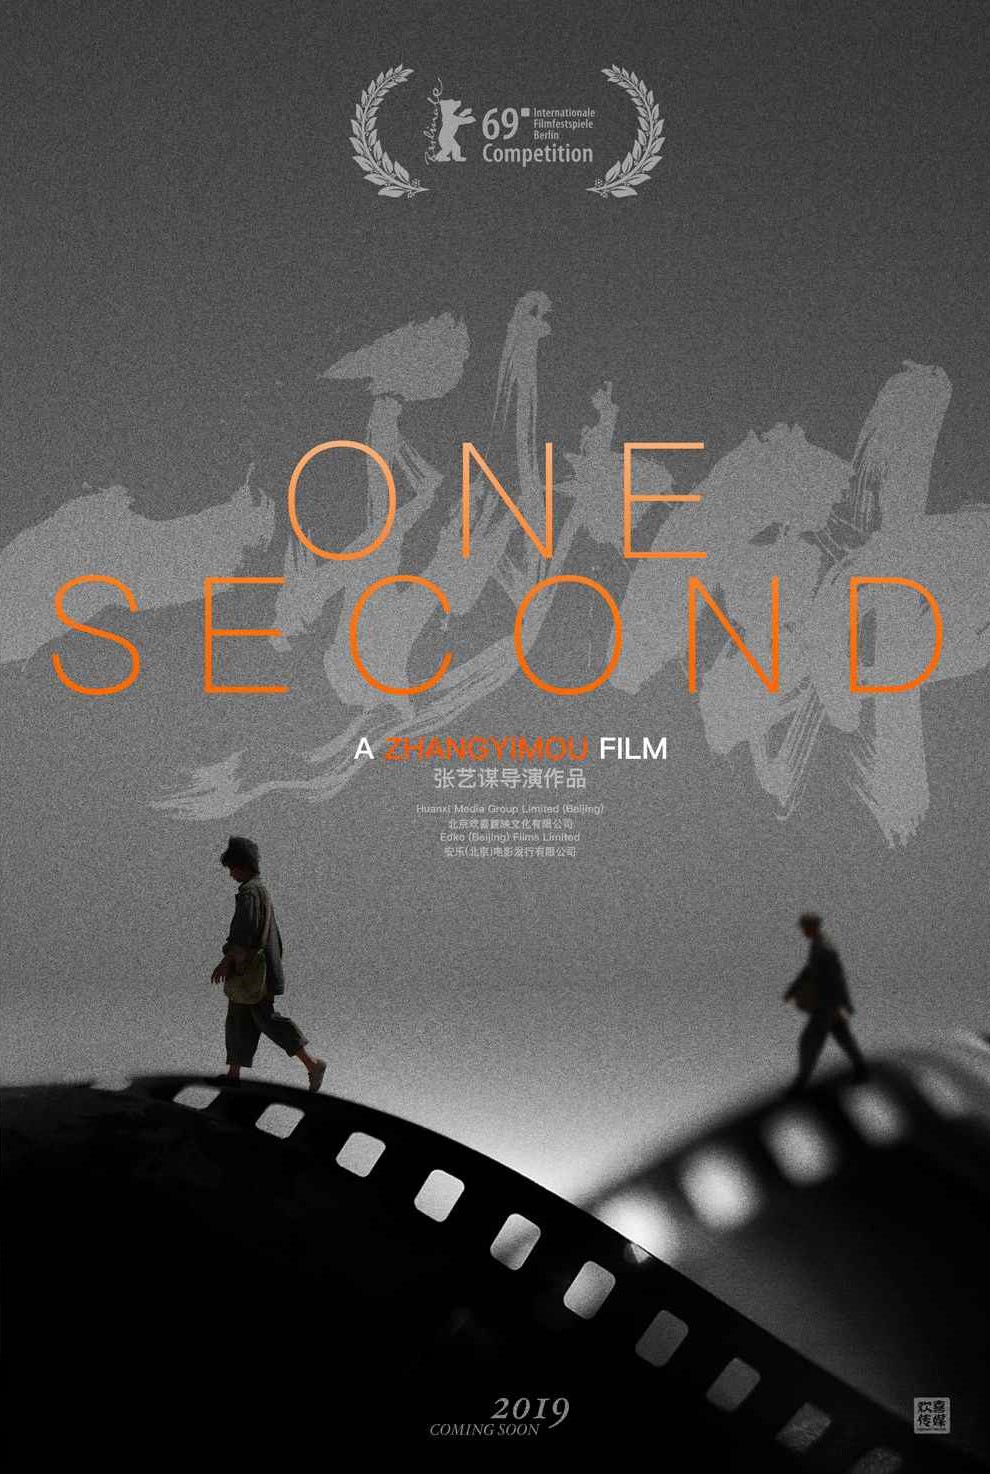 Cineforum "Buster Keaton" - "One Second"